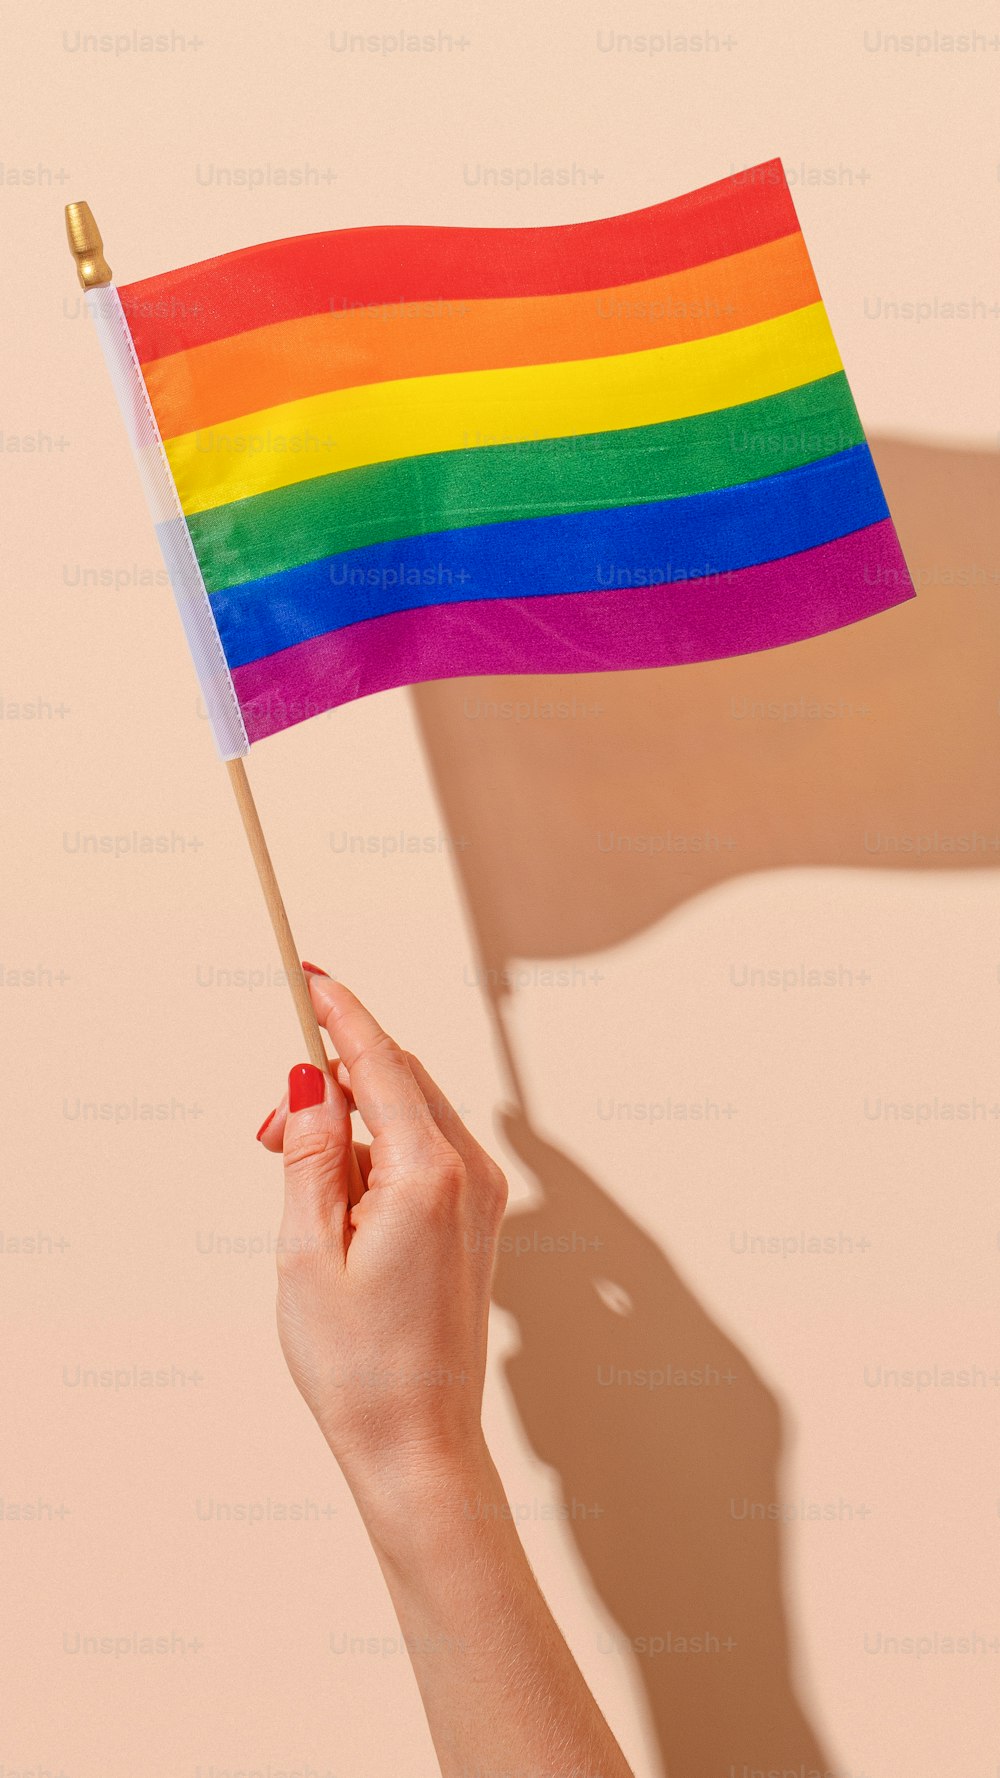 Una persona che tiene in mano una bandiera arcobaleno